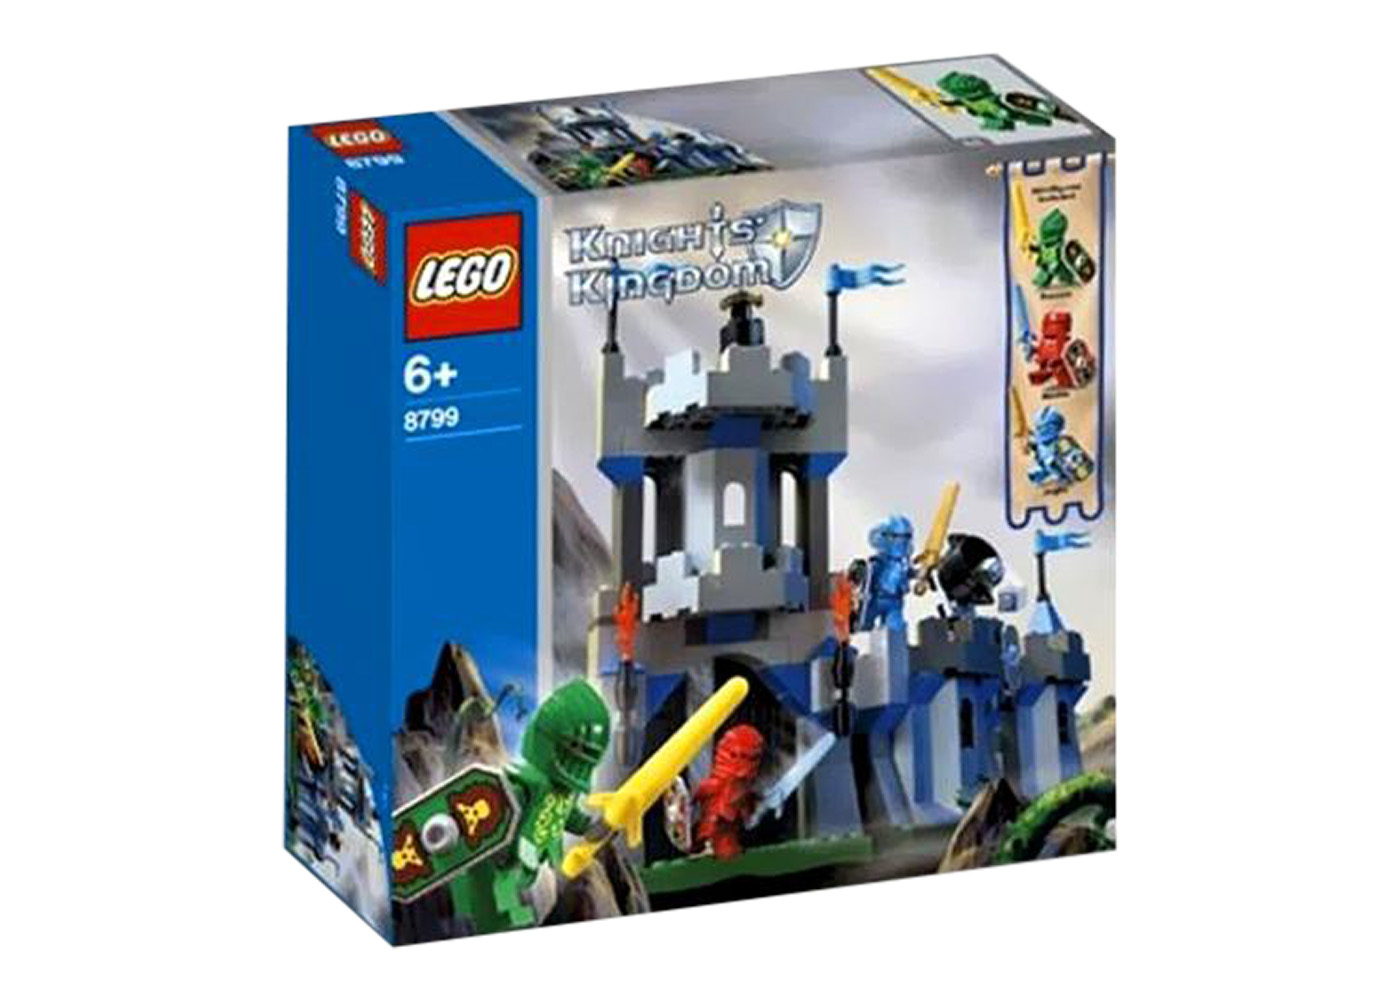 LEGO Knights Kingdom Knight's Castle Wall Set 8799